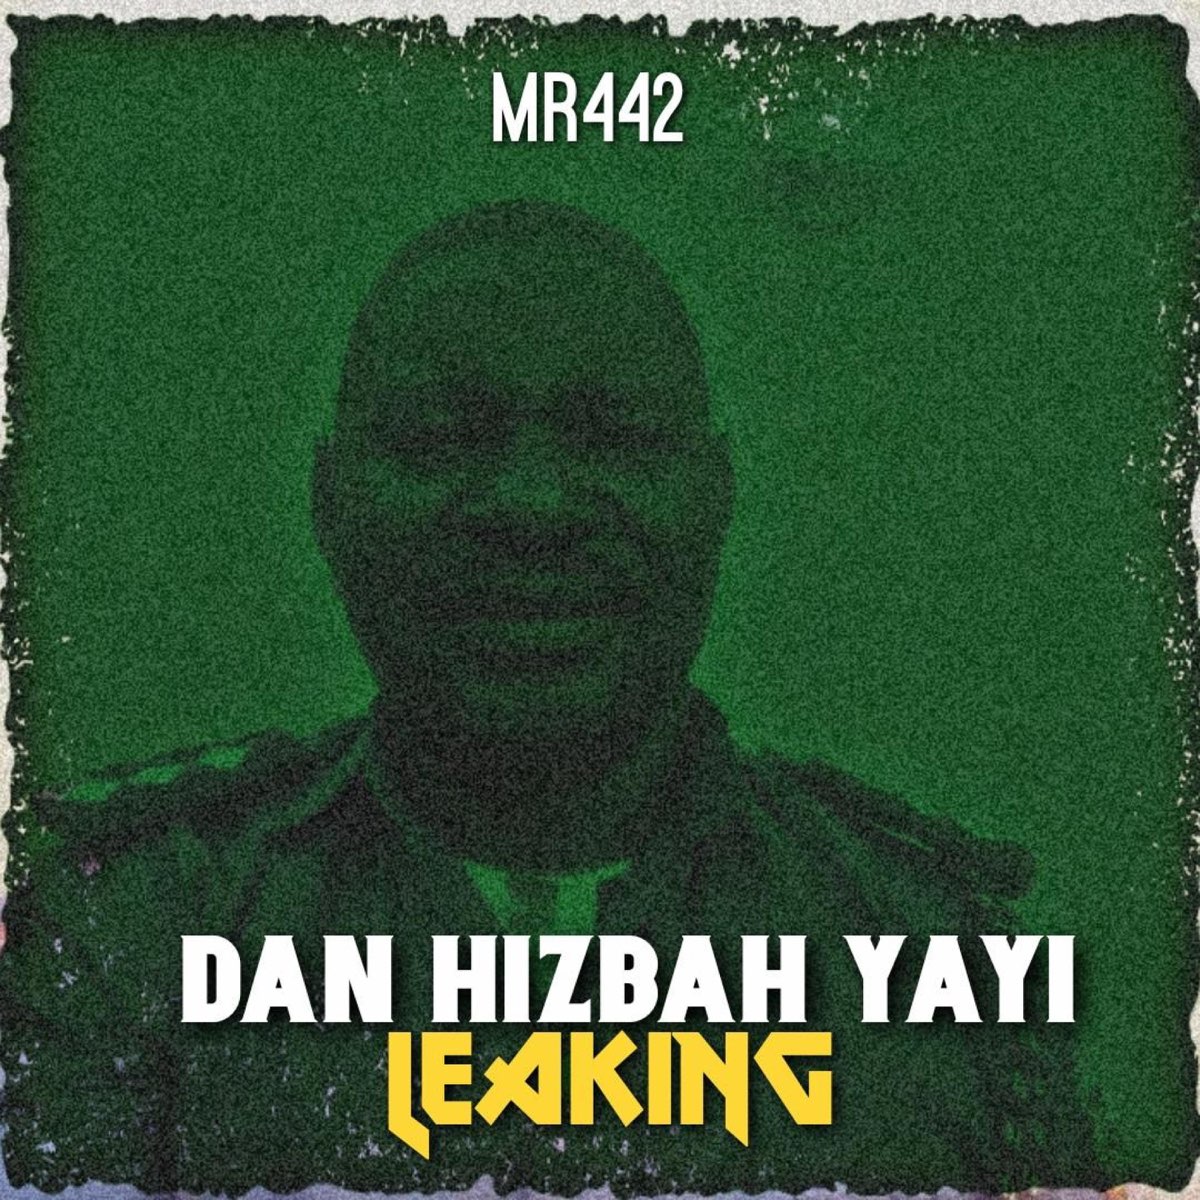 Dan Hizbah yayi Leaking - Single by Mr442 on Apple Music